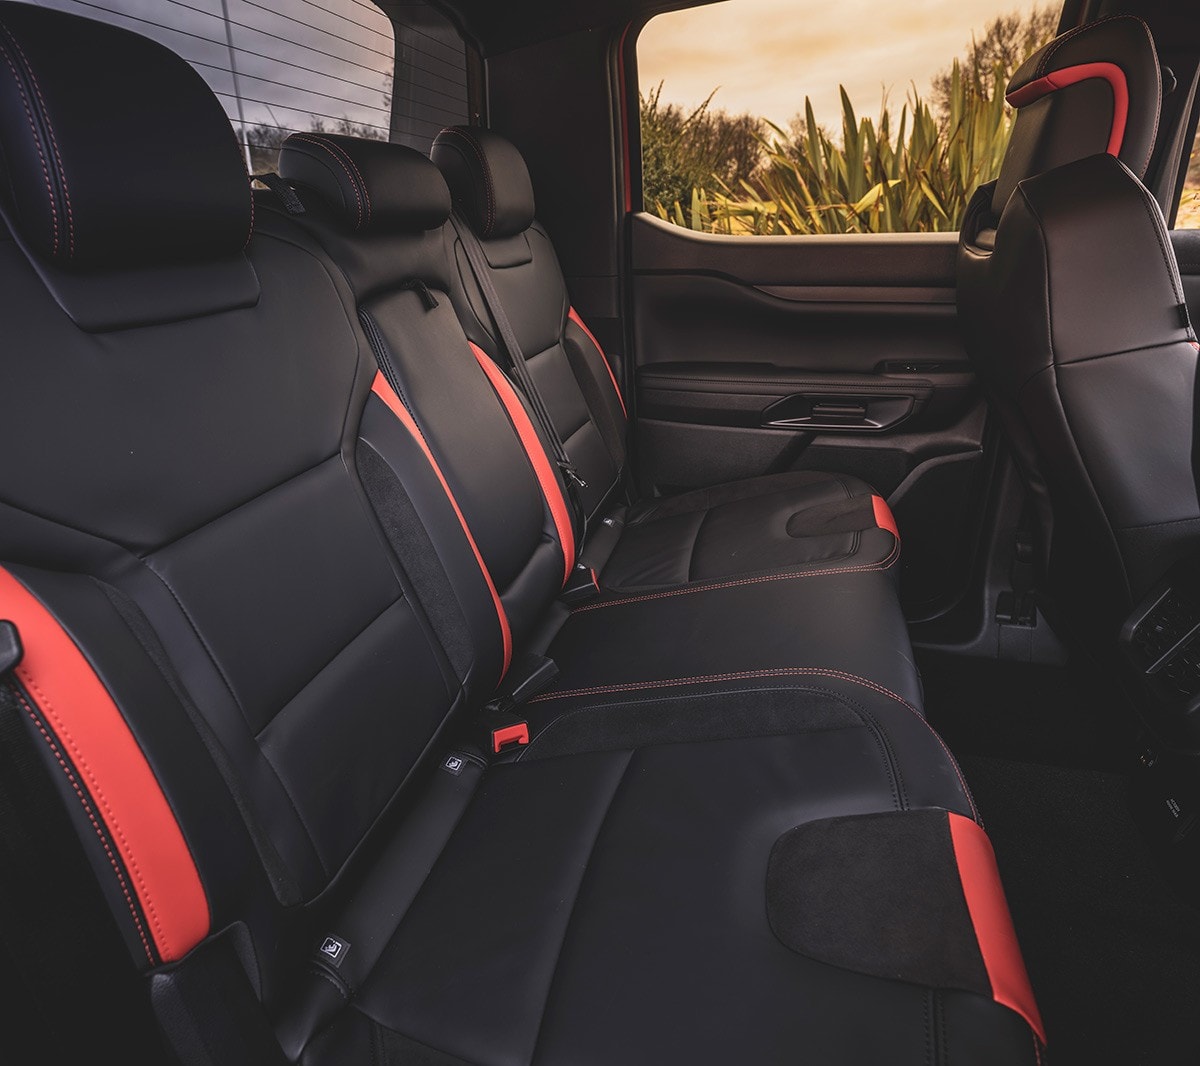 Ford Ranger Raptor interior backseat view